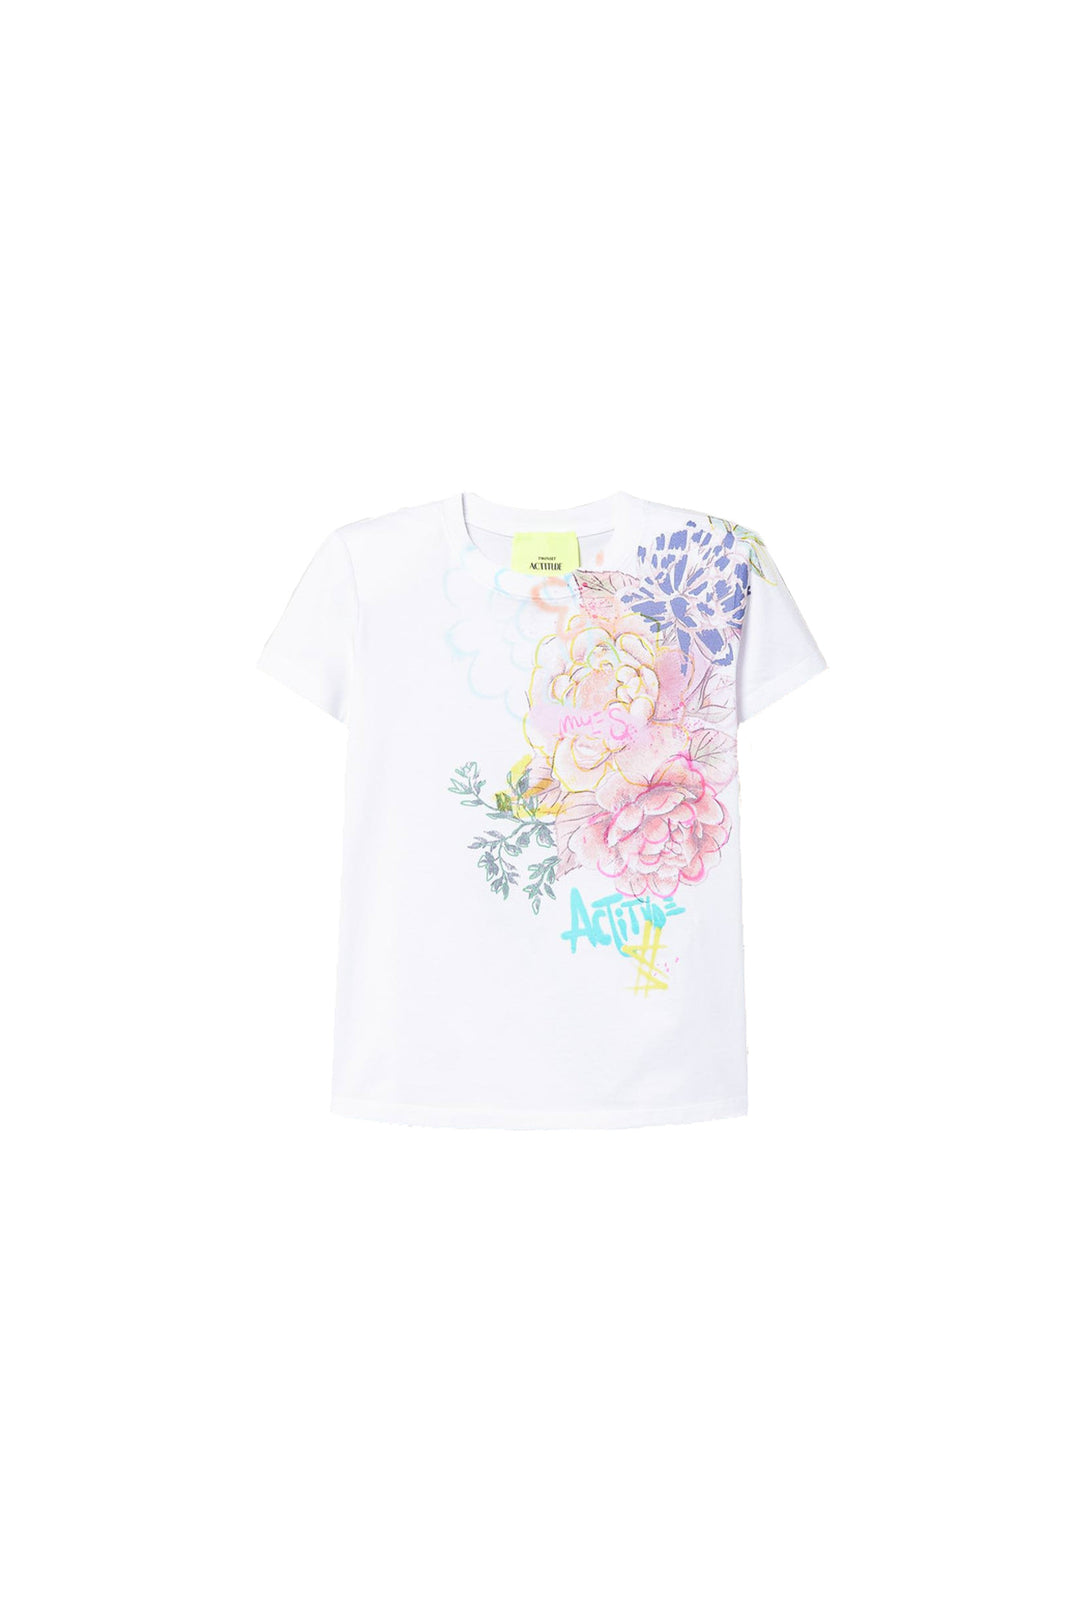 ACTITUDE TWINSET T-shirt MYFO bianca con spalline e stampa a fiori - Mancinelli 1954